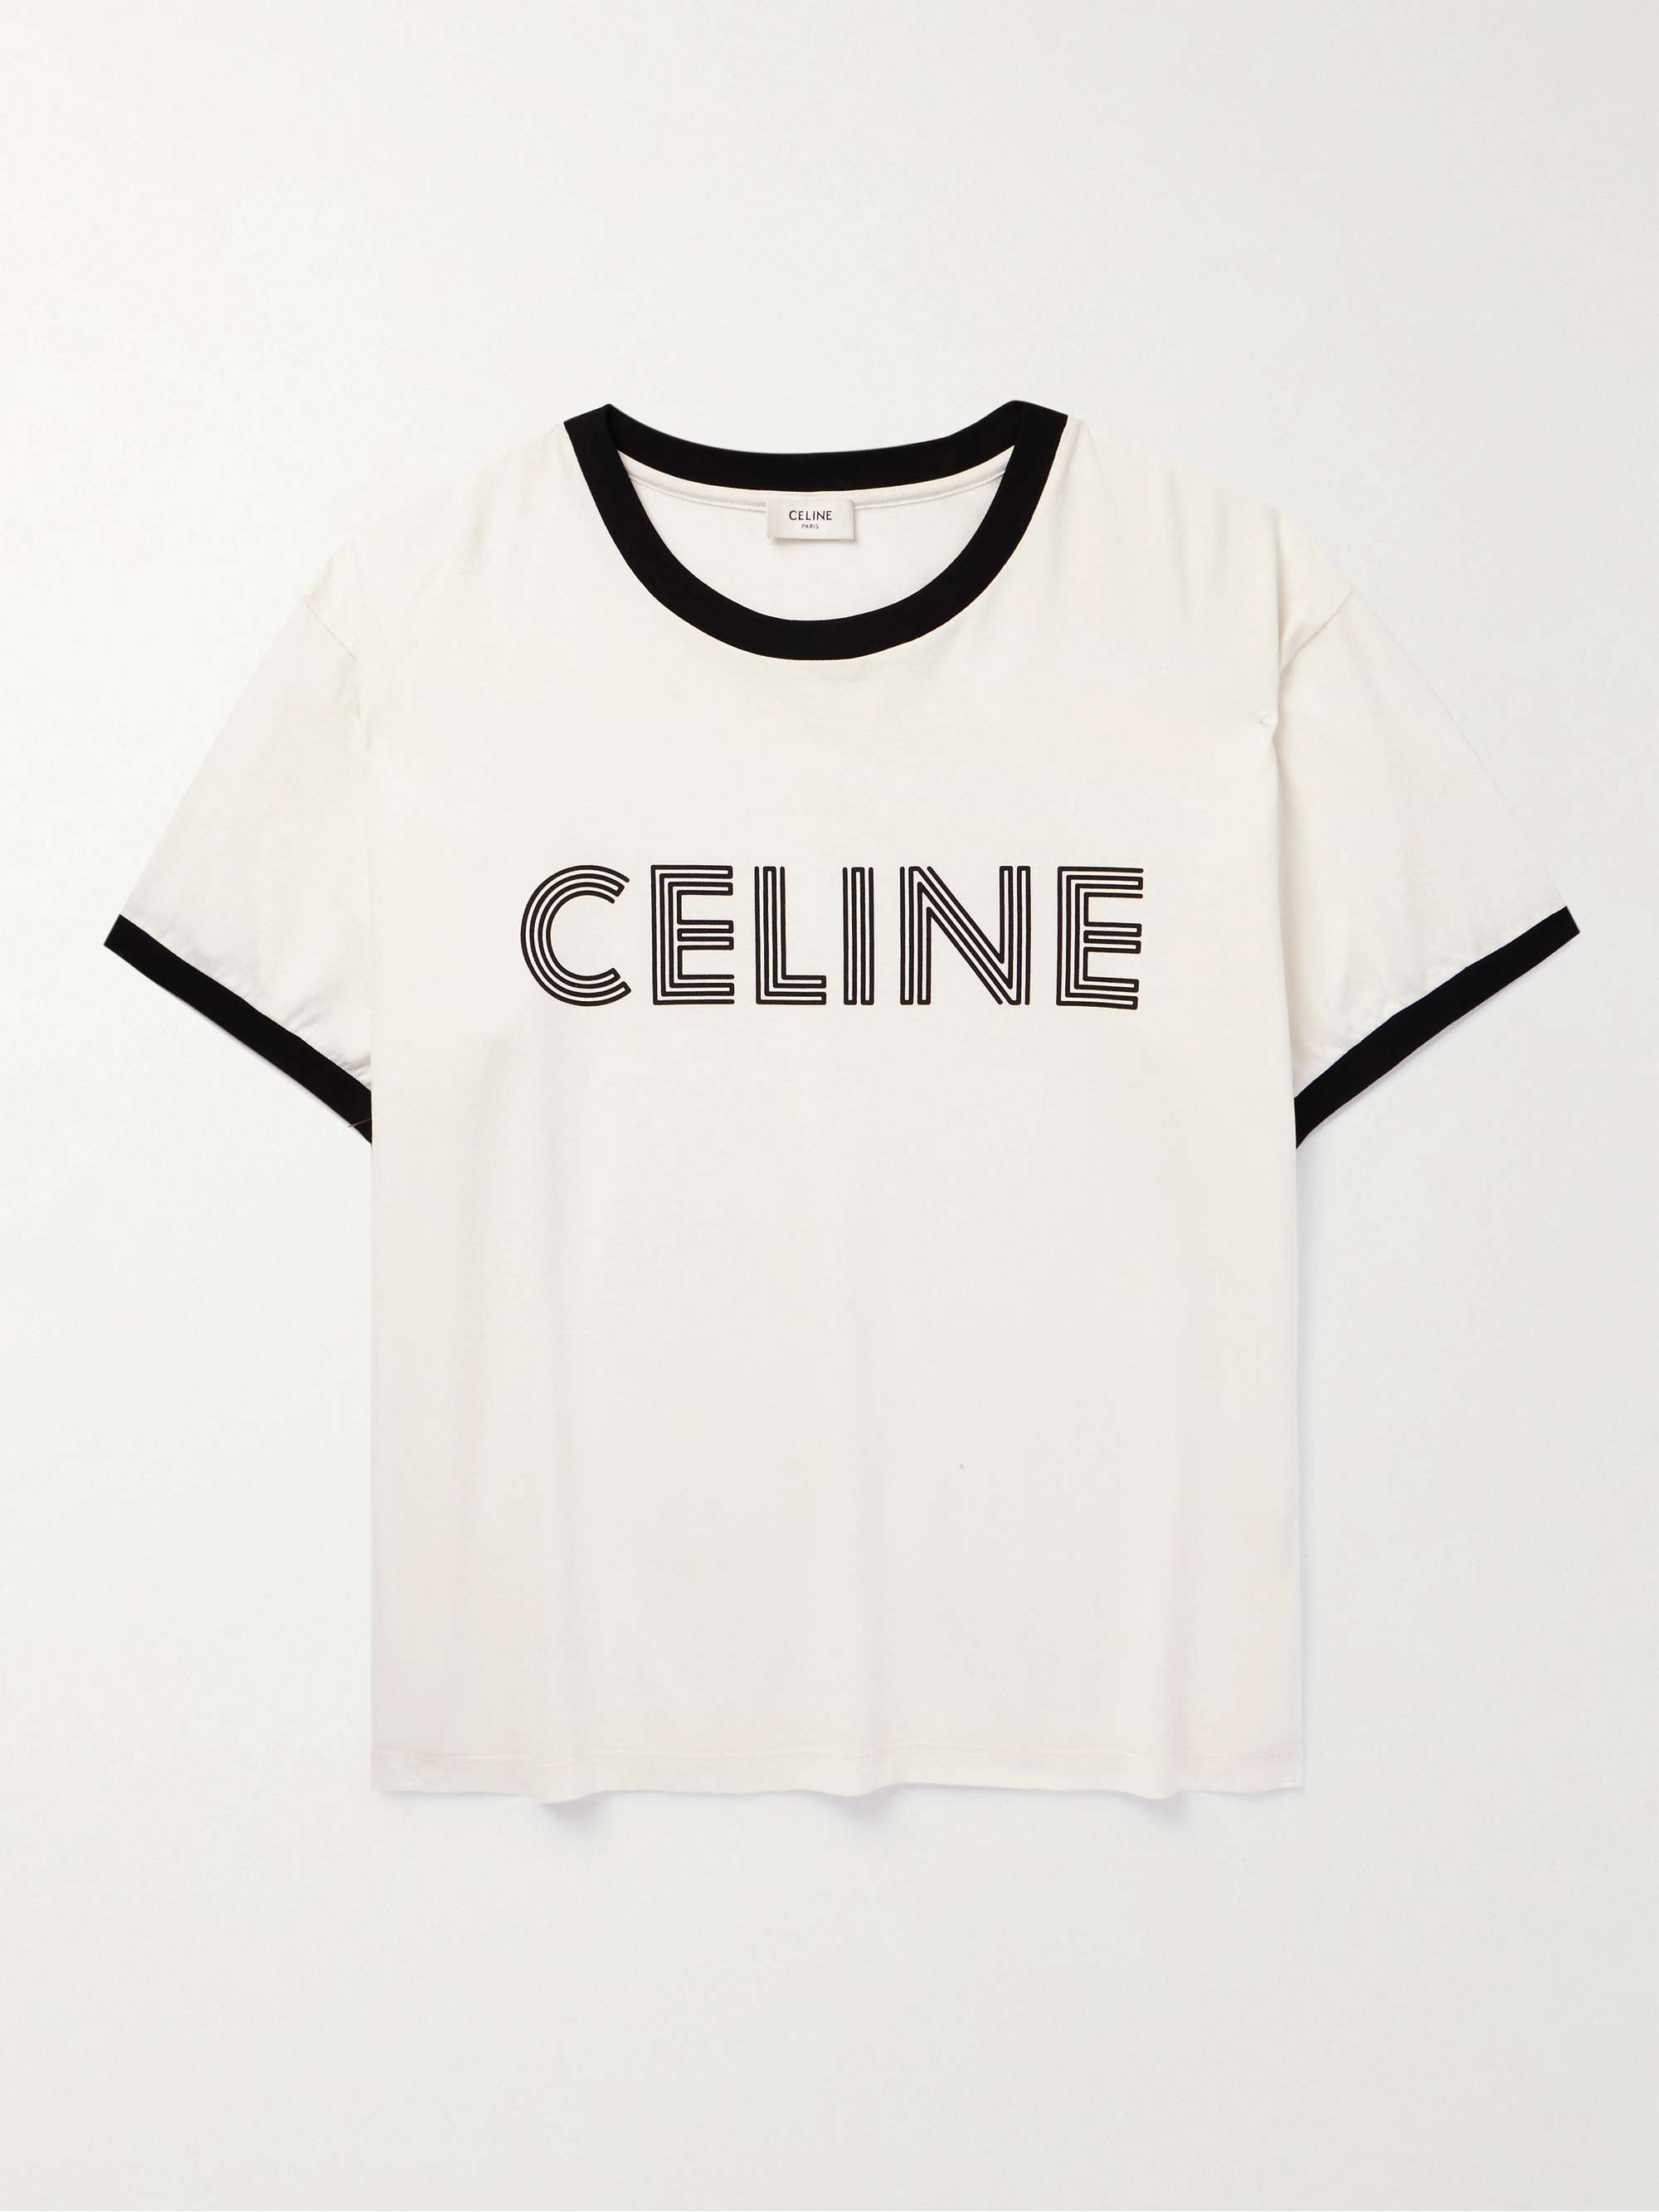 Celine Women's Cotton Jersey T-Shirt